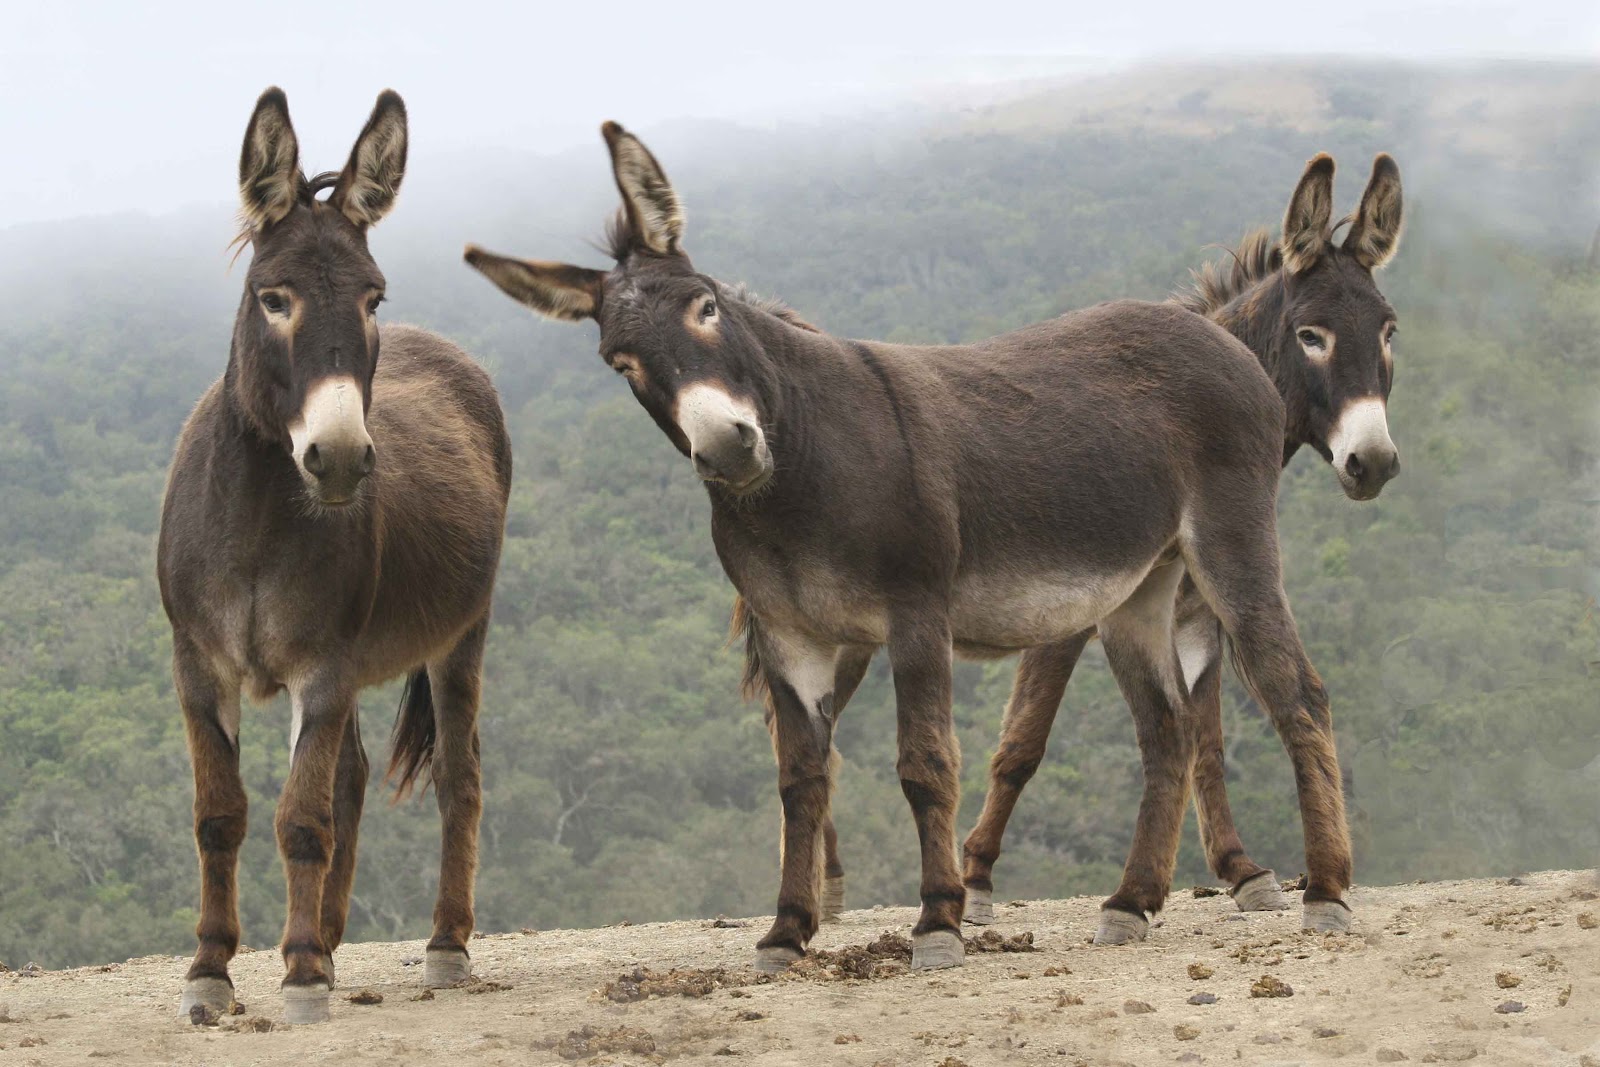 https://www.infobae.com/america/america-latina/2017/01/18/el-burro-un-animal-en-peligro-de-extincion/